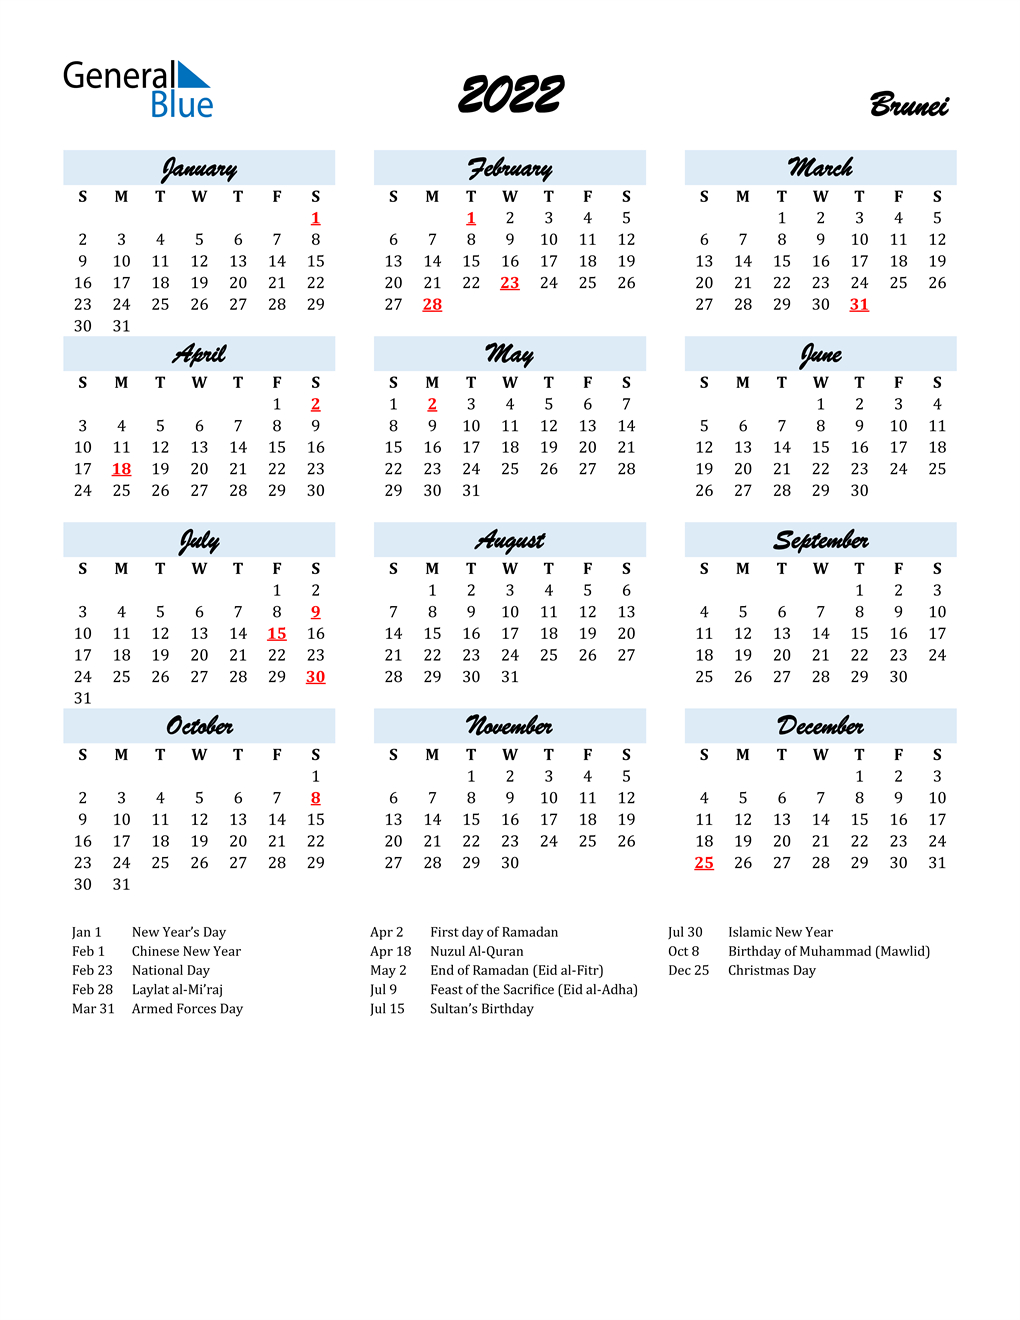 Muslim Holiday Calendar 2022 - October 2022 Calendar